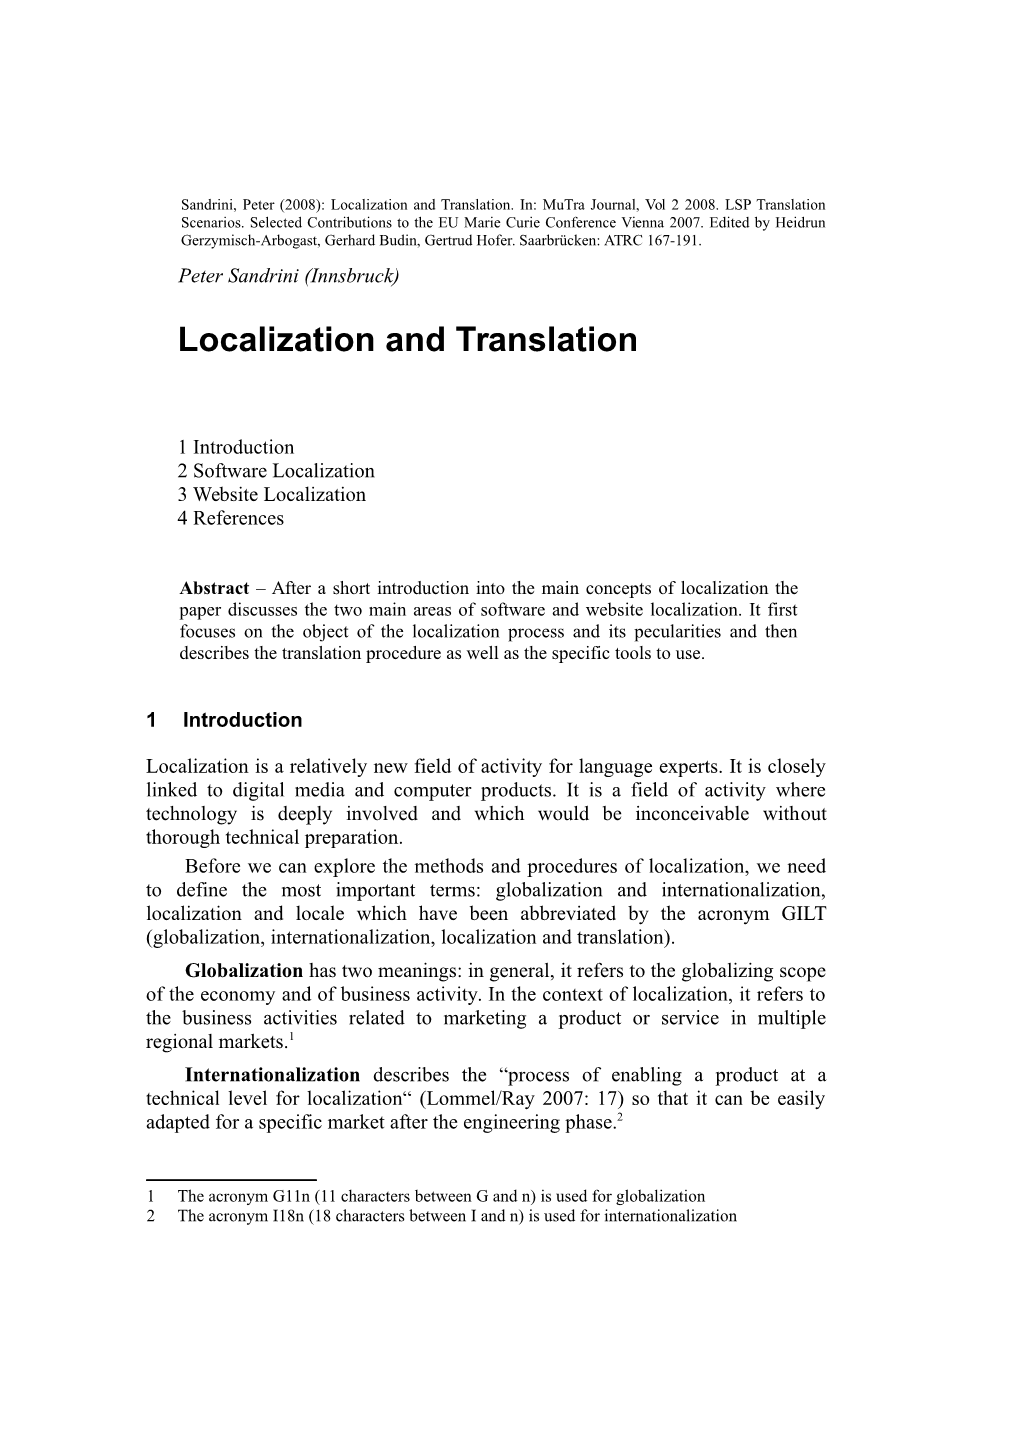 Localization and Translation